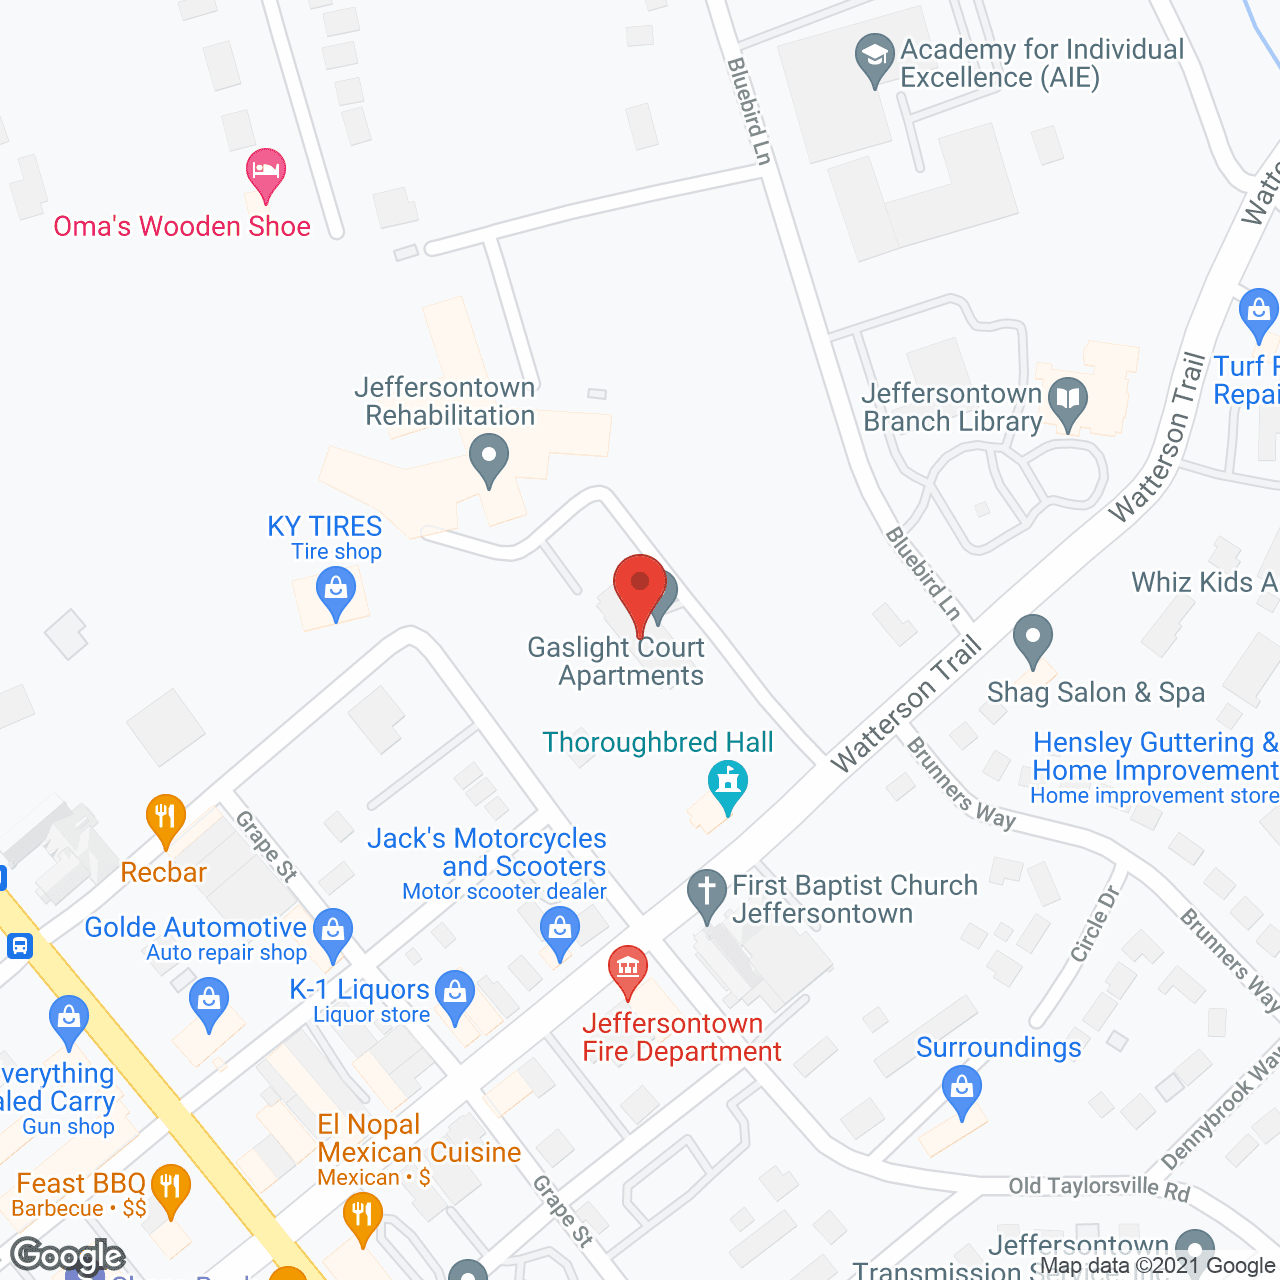 Gaslight Court in google map